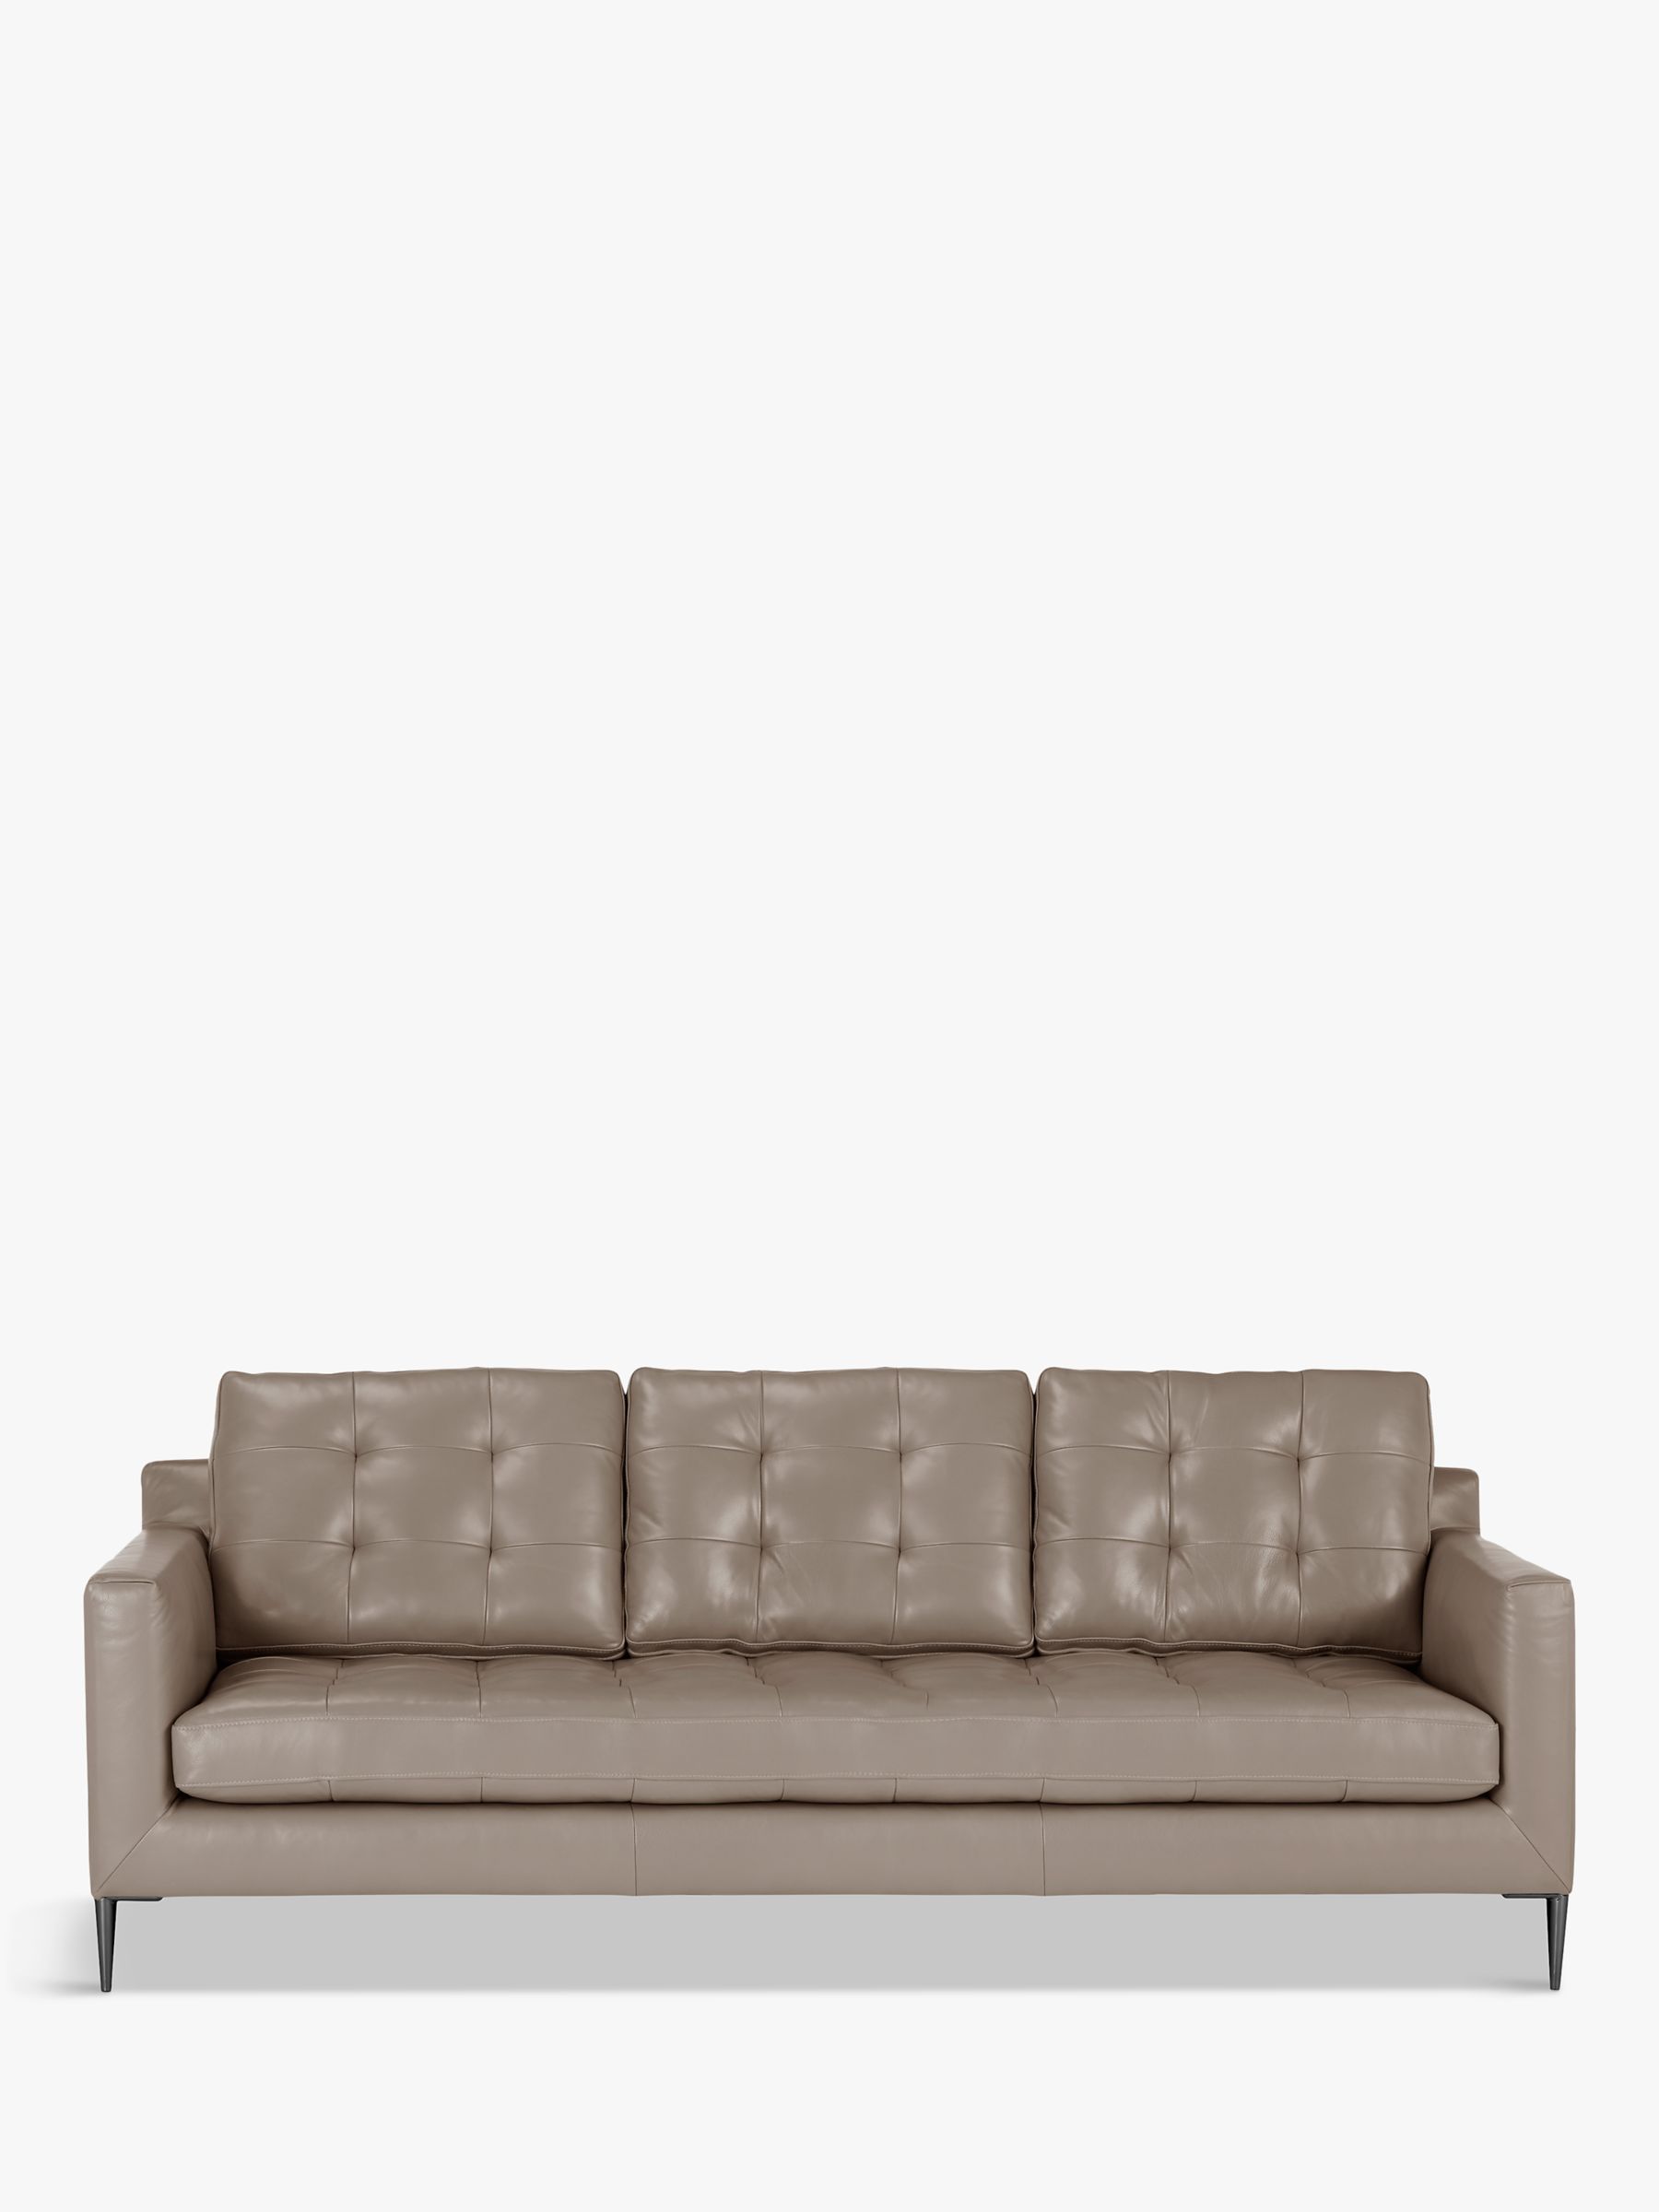 John Lewis Draper Grand 4 Seater Leather Sofa, Metal Leg